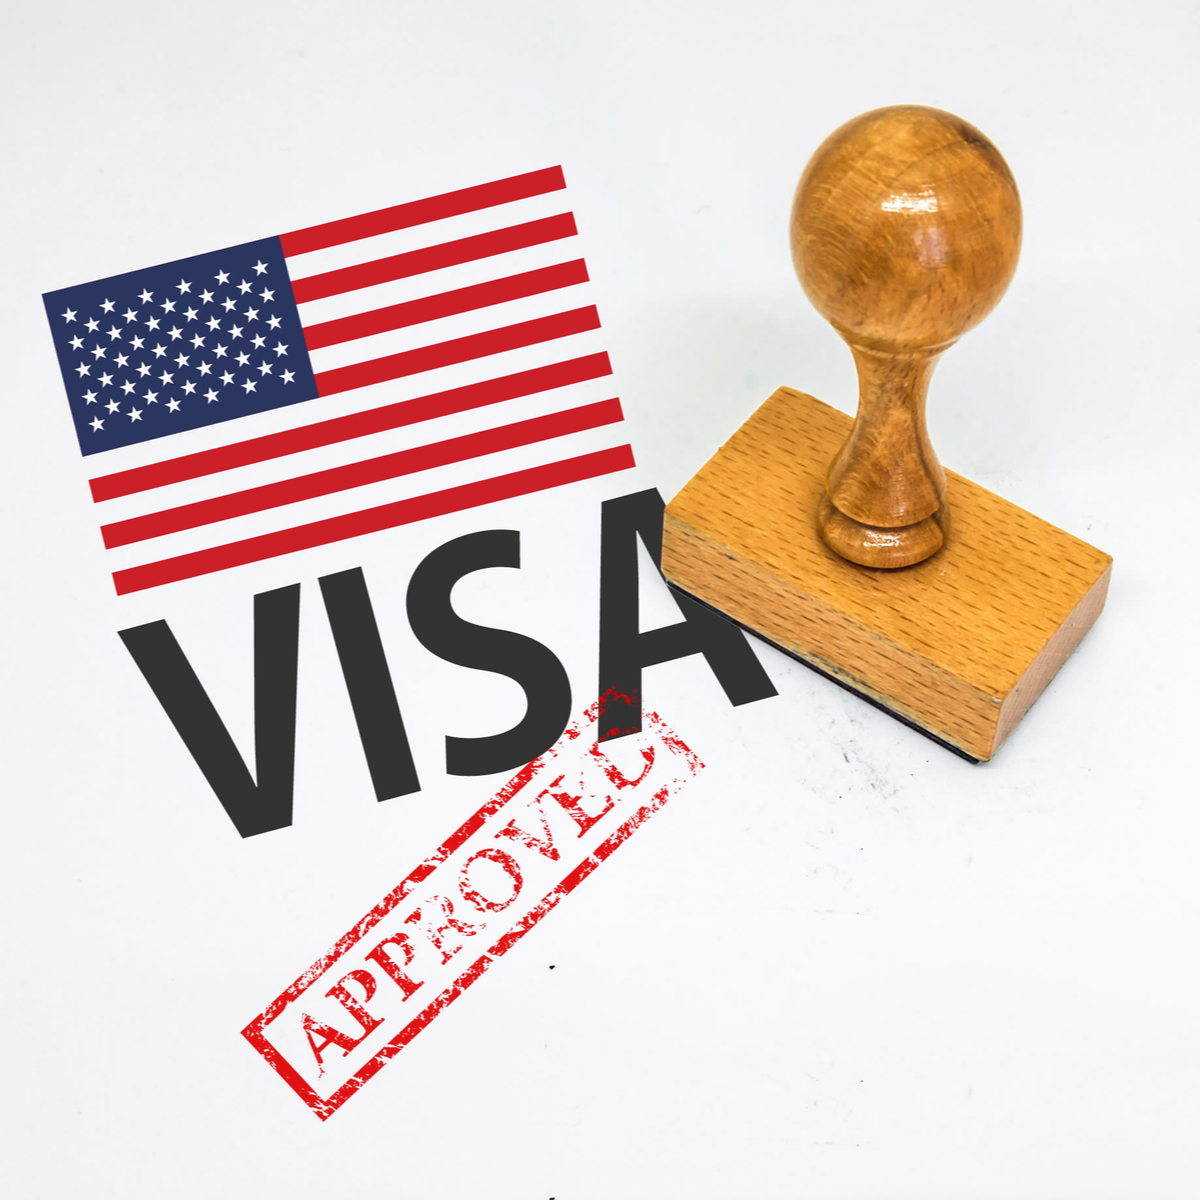 U visa approval time